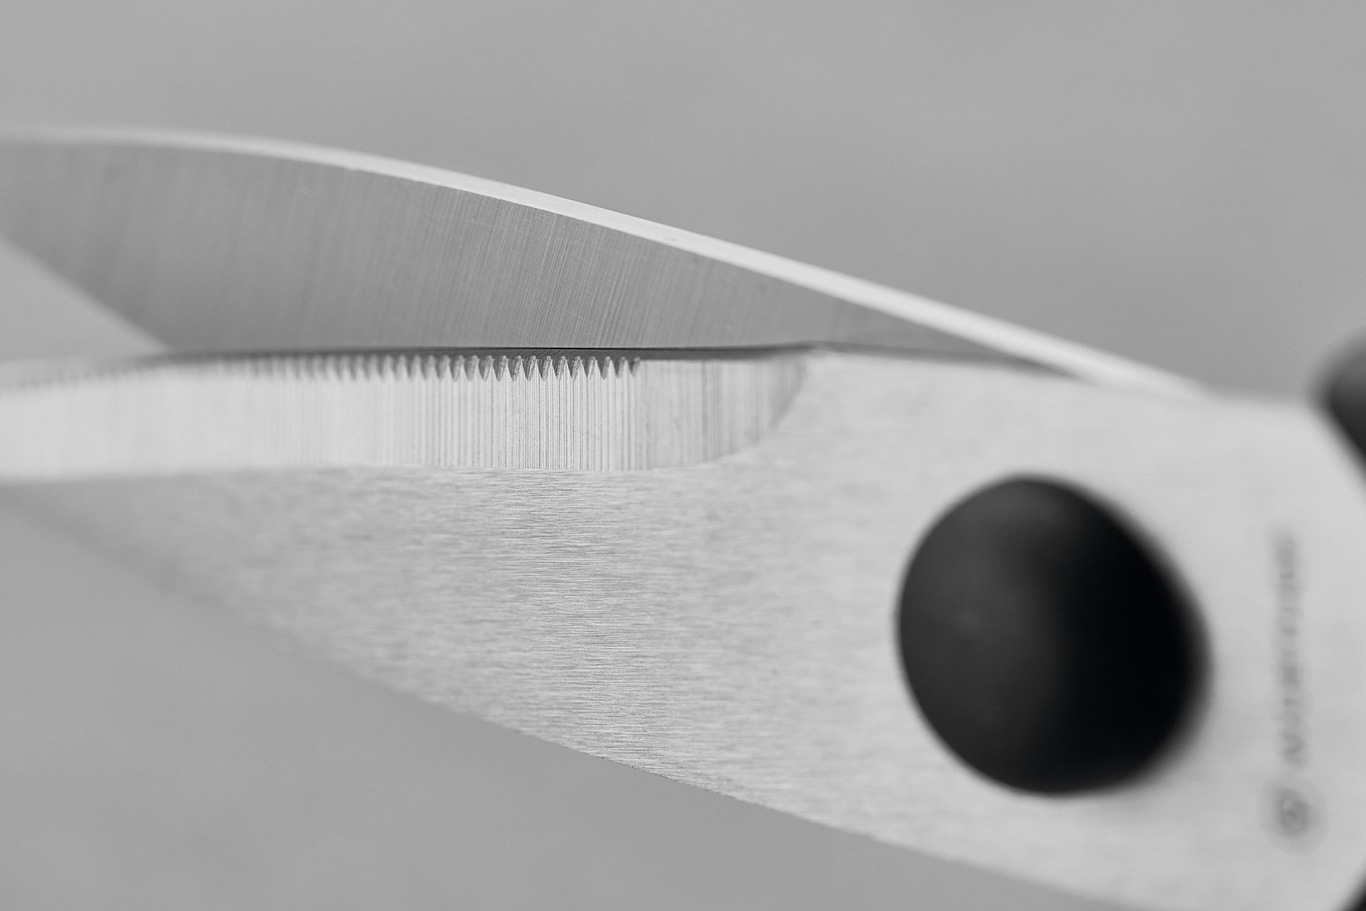 https://royaldesign.com/image/2/wusthof-kitchen-scissors-21-cm-black-3?w=800&quality=80